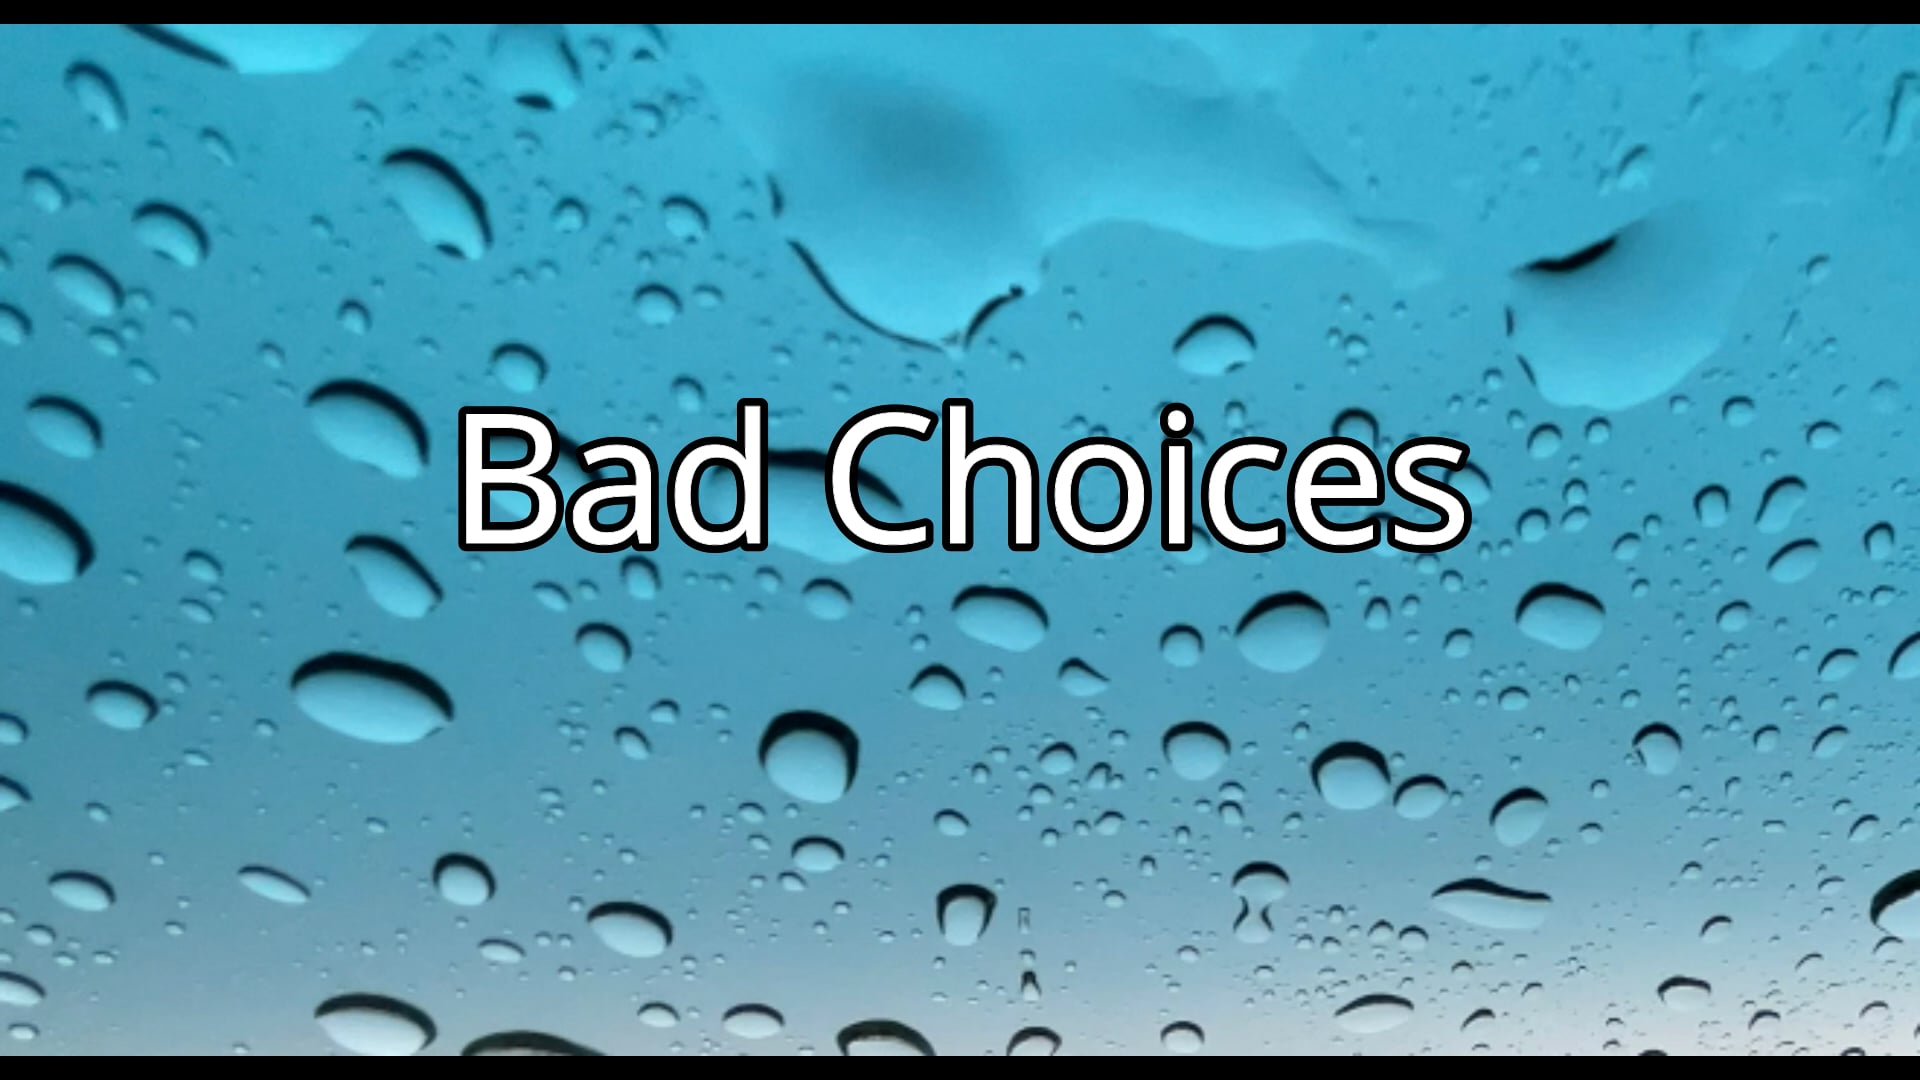 Bad Choices